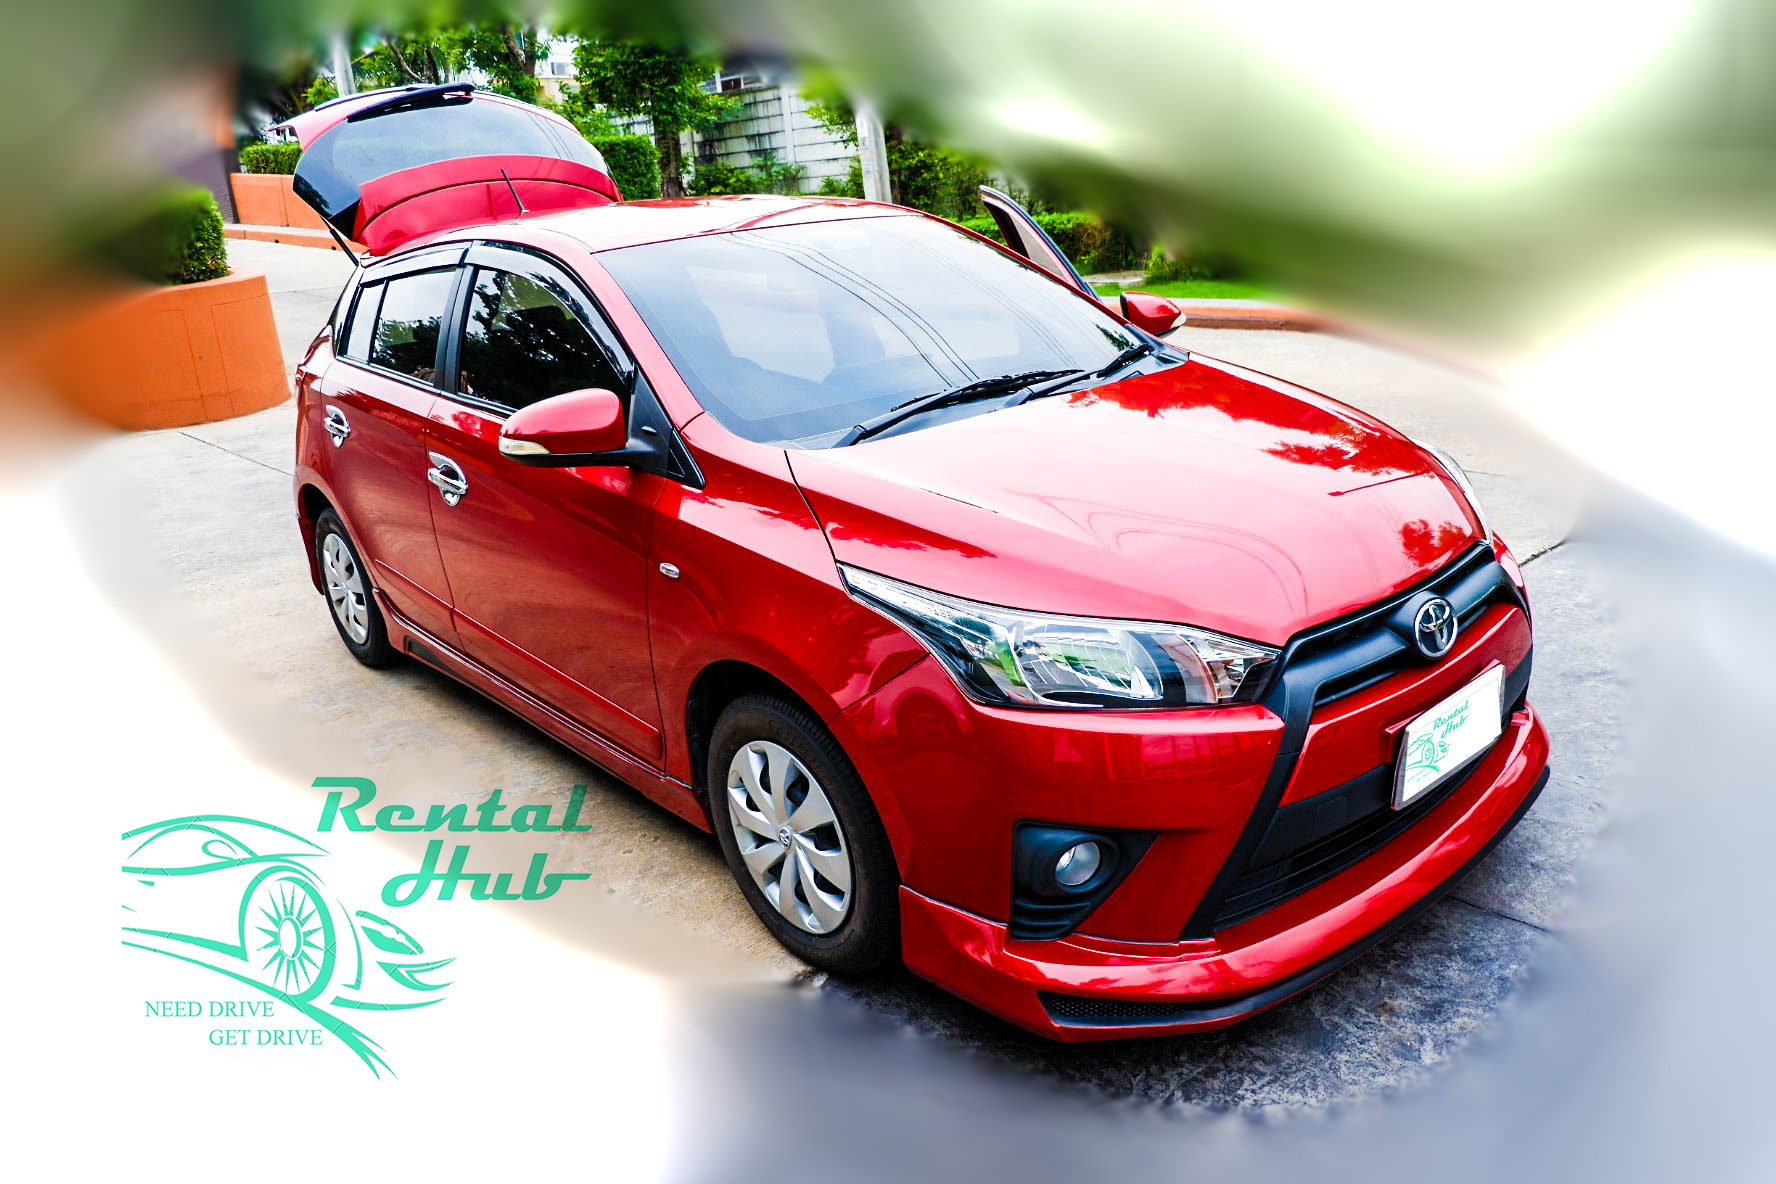 Toyota Yaris (Hatch back) - Red